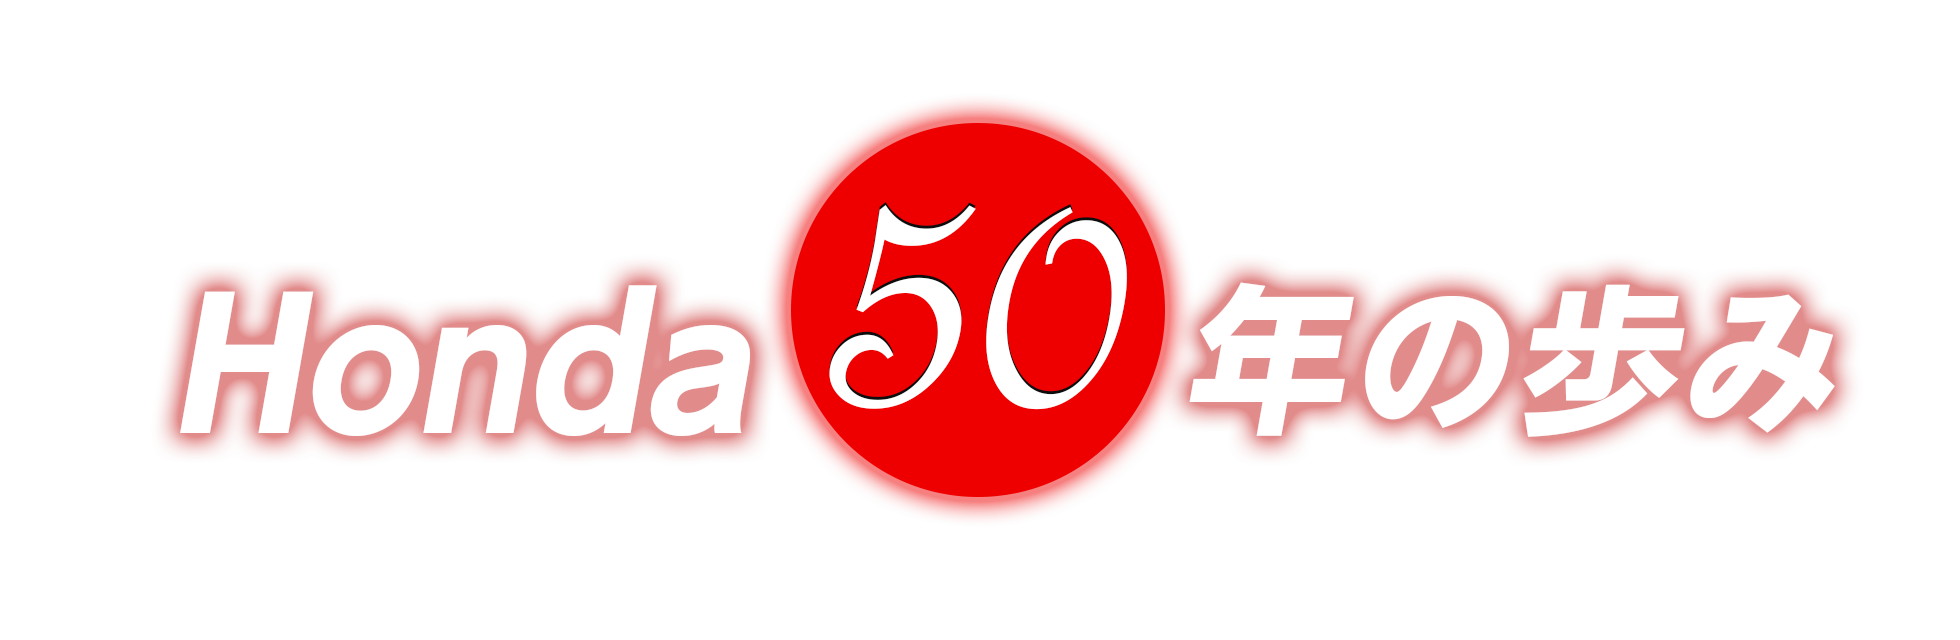 Honda ロードレース世界選手権 ロードレースの最高峰クラス Honda 50年の歩み